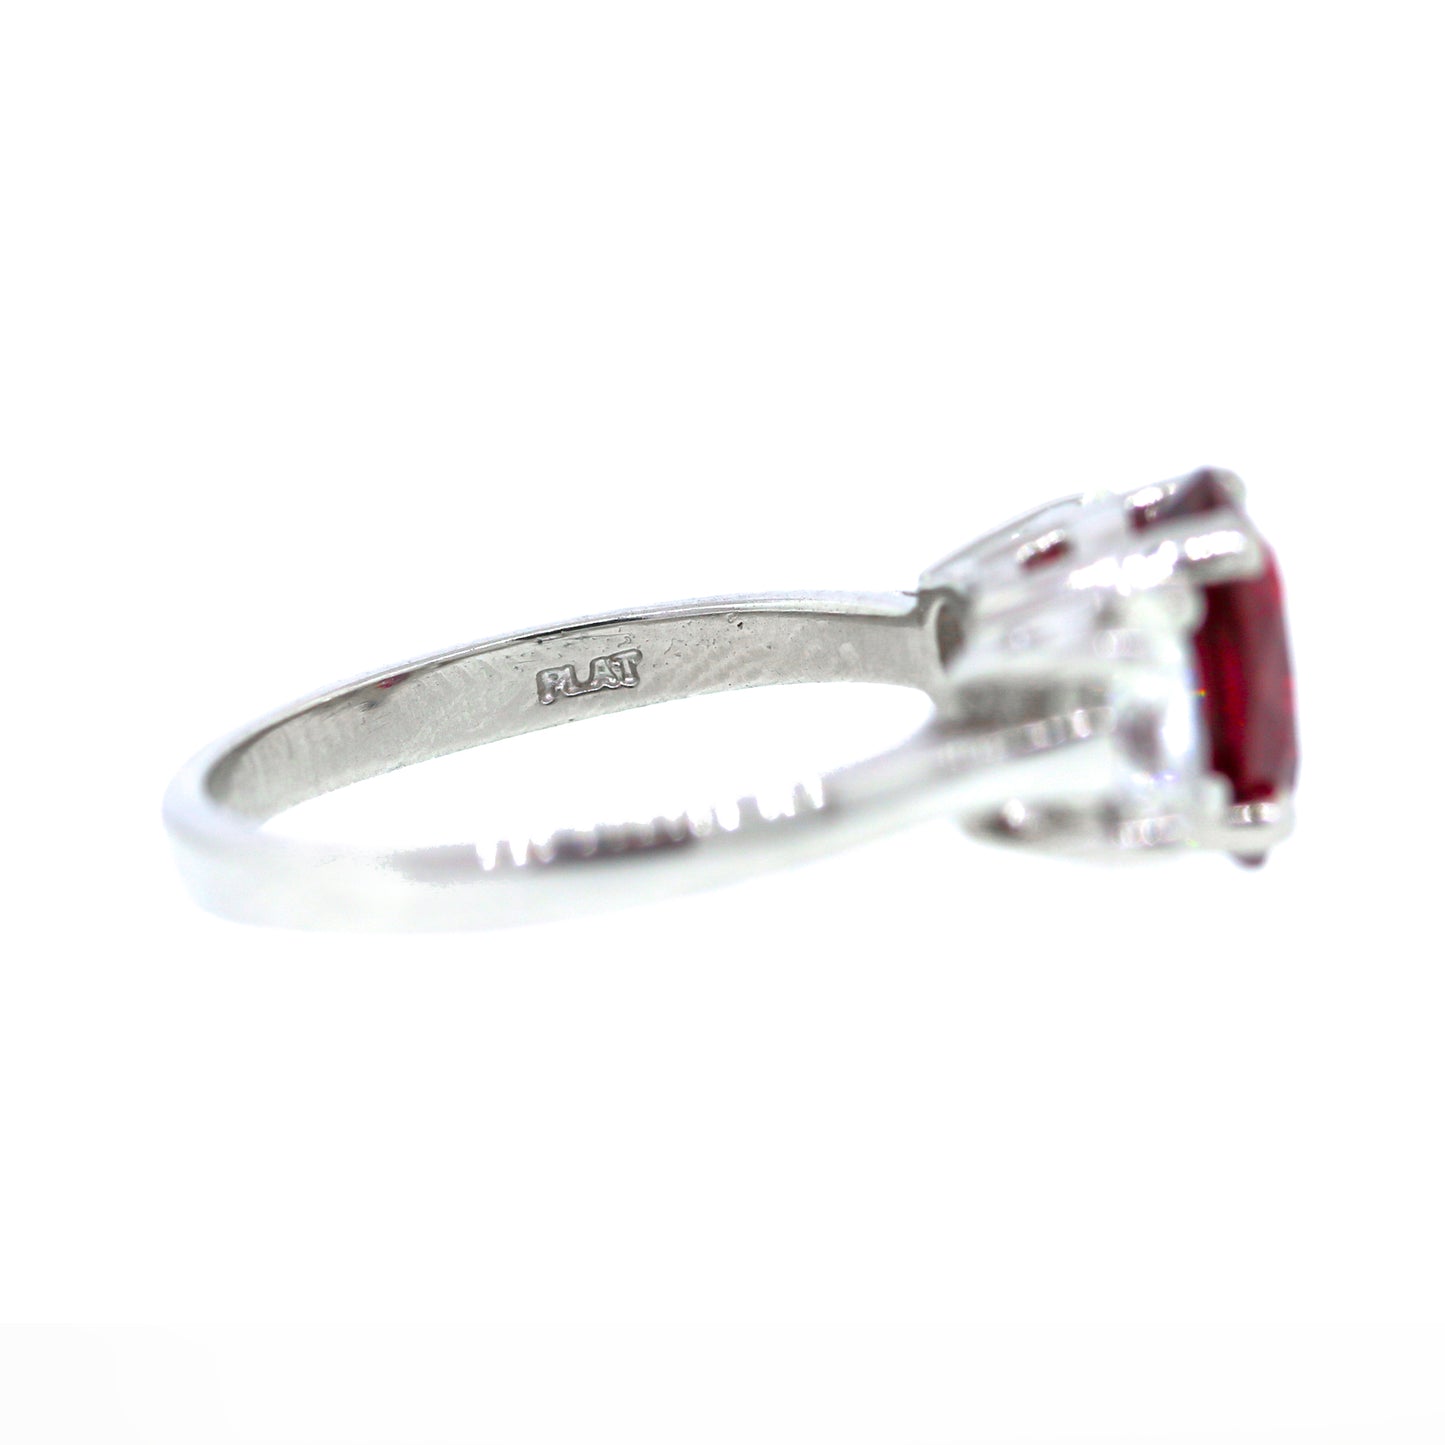 Stunning Natural Madagascan Ruby & Platinum Diamond Engagement Ring